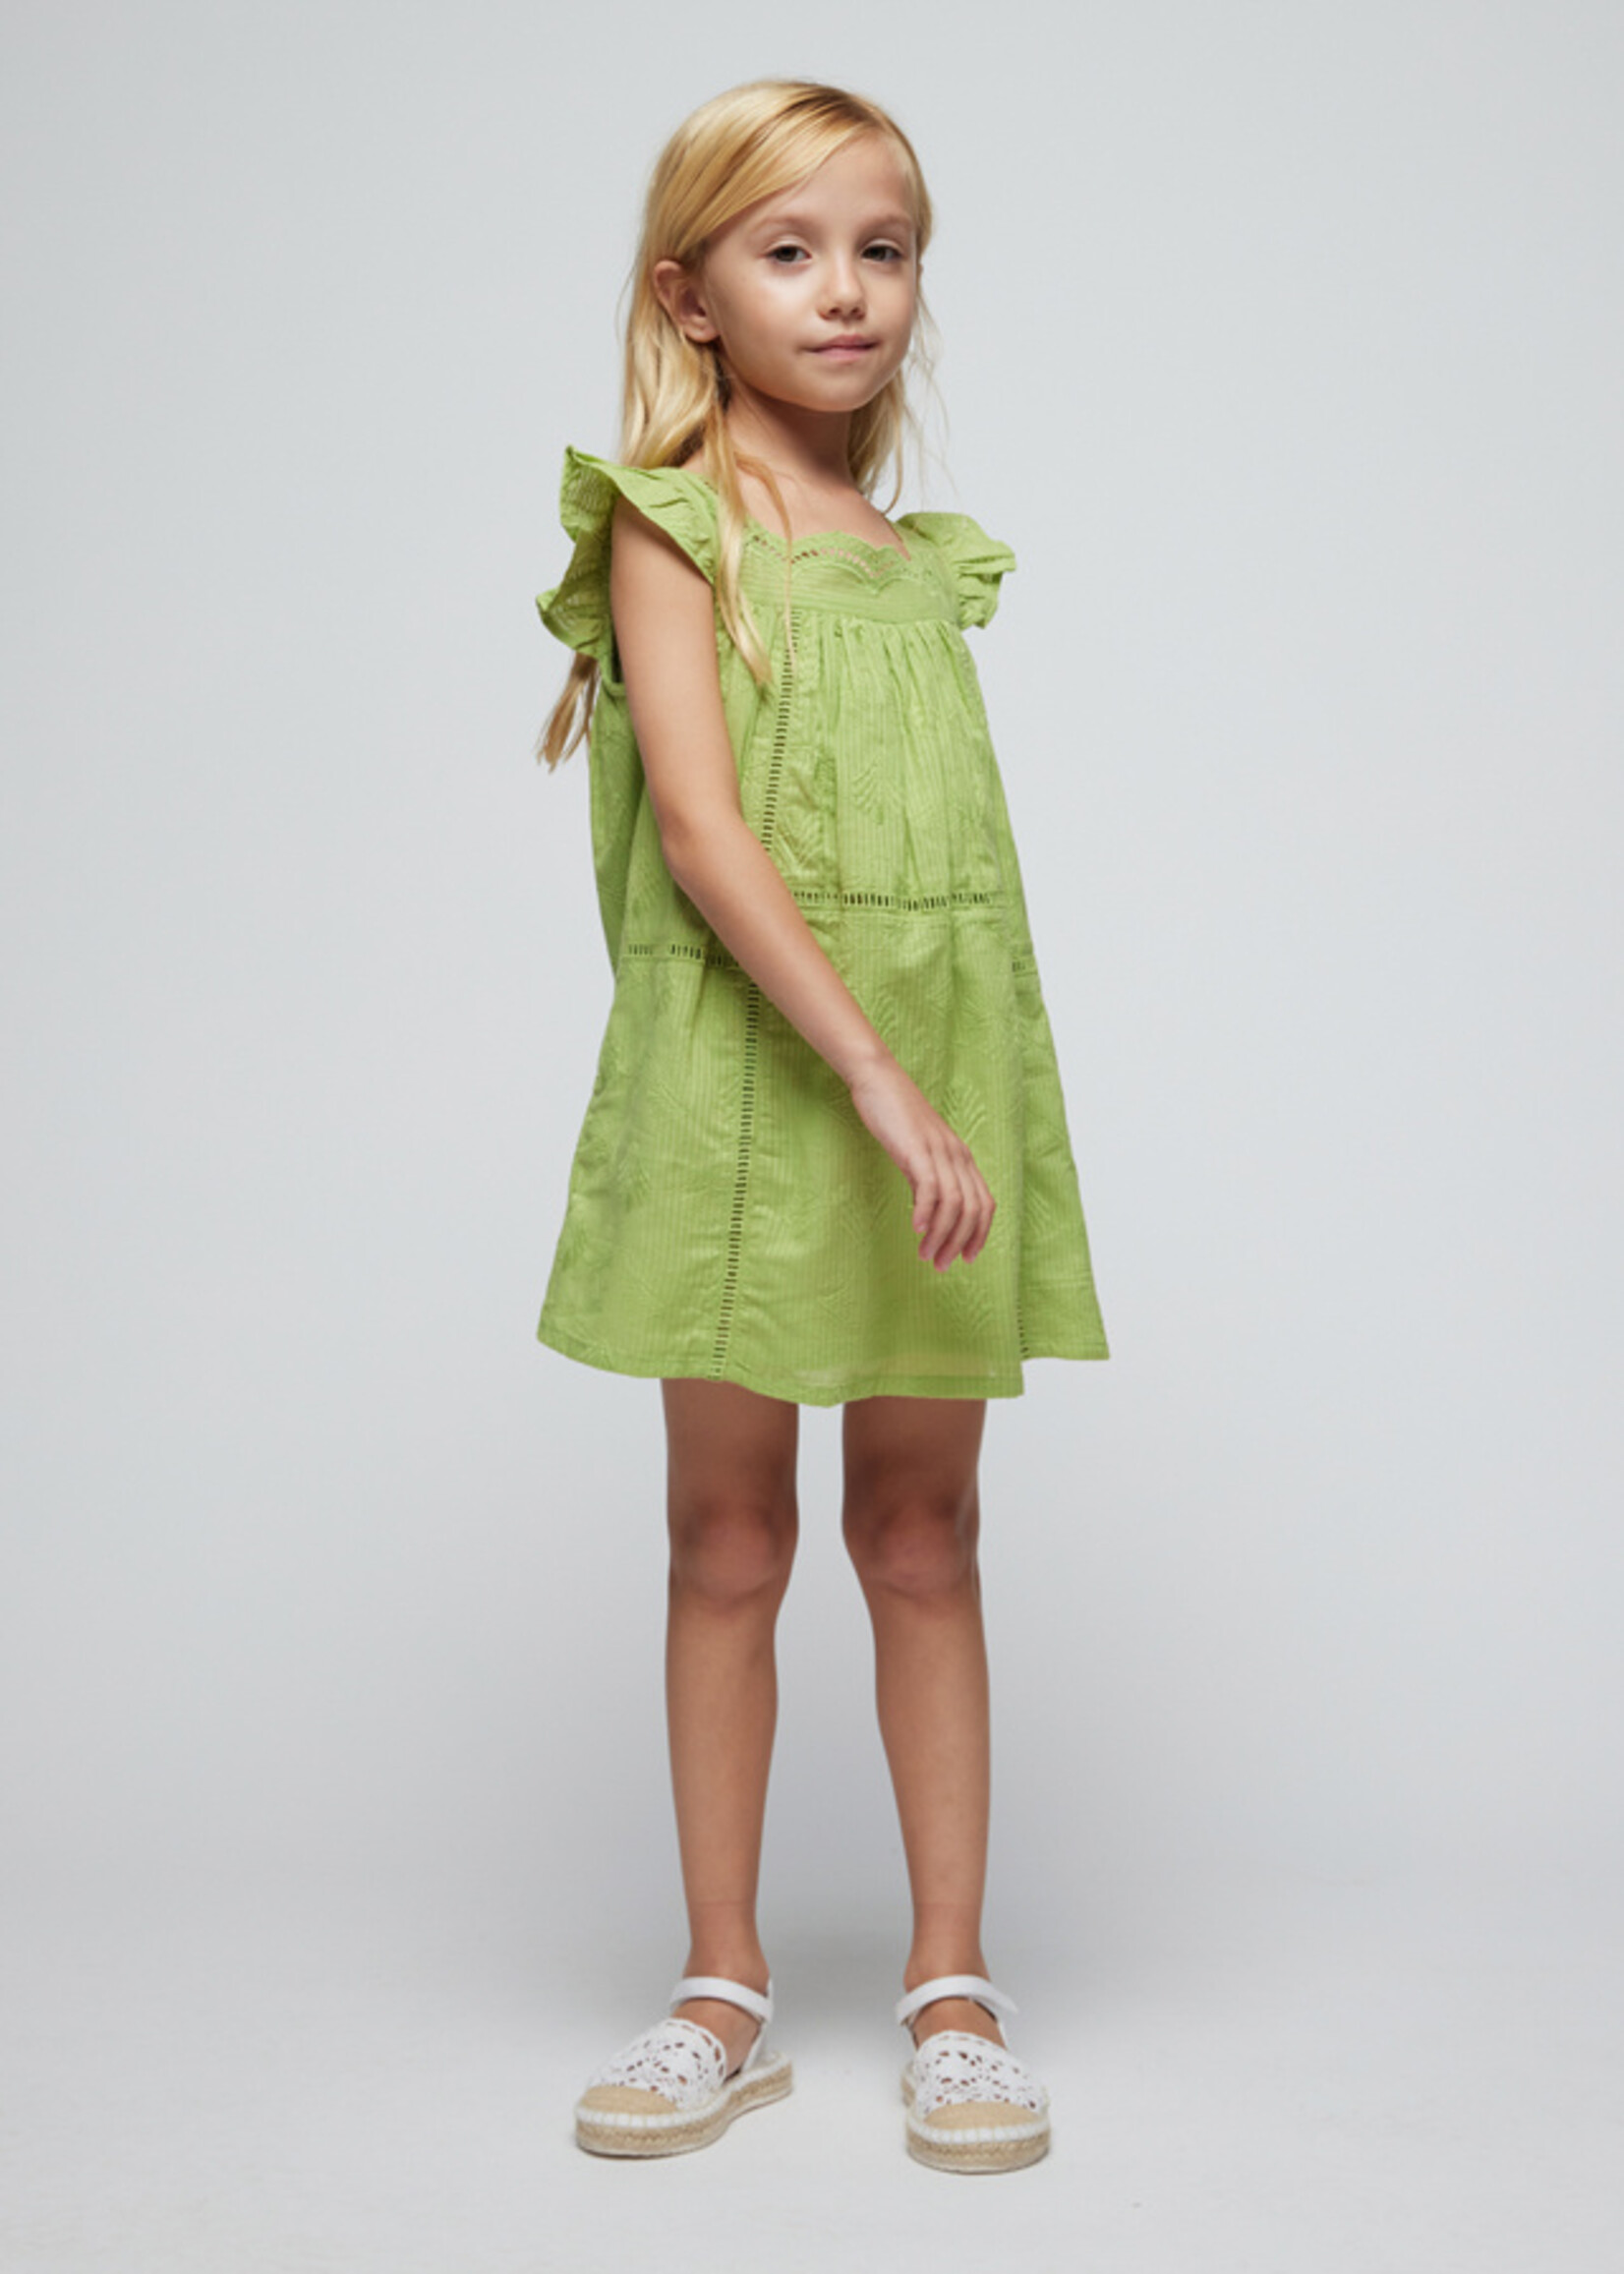 Mayoral Mini Girl            3930 Embroidered dress             Apple